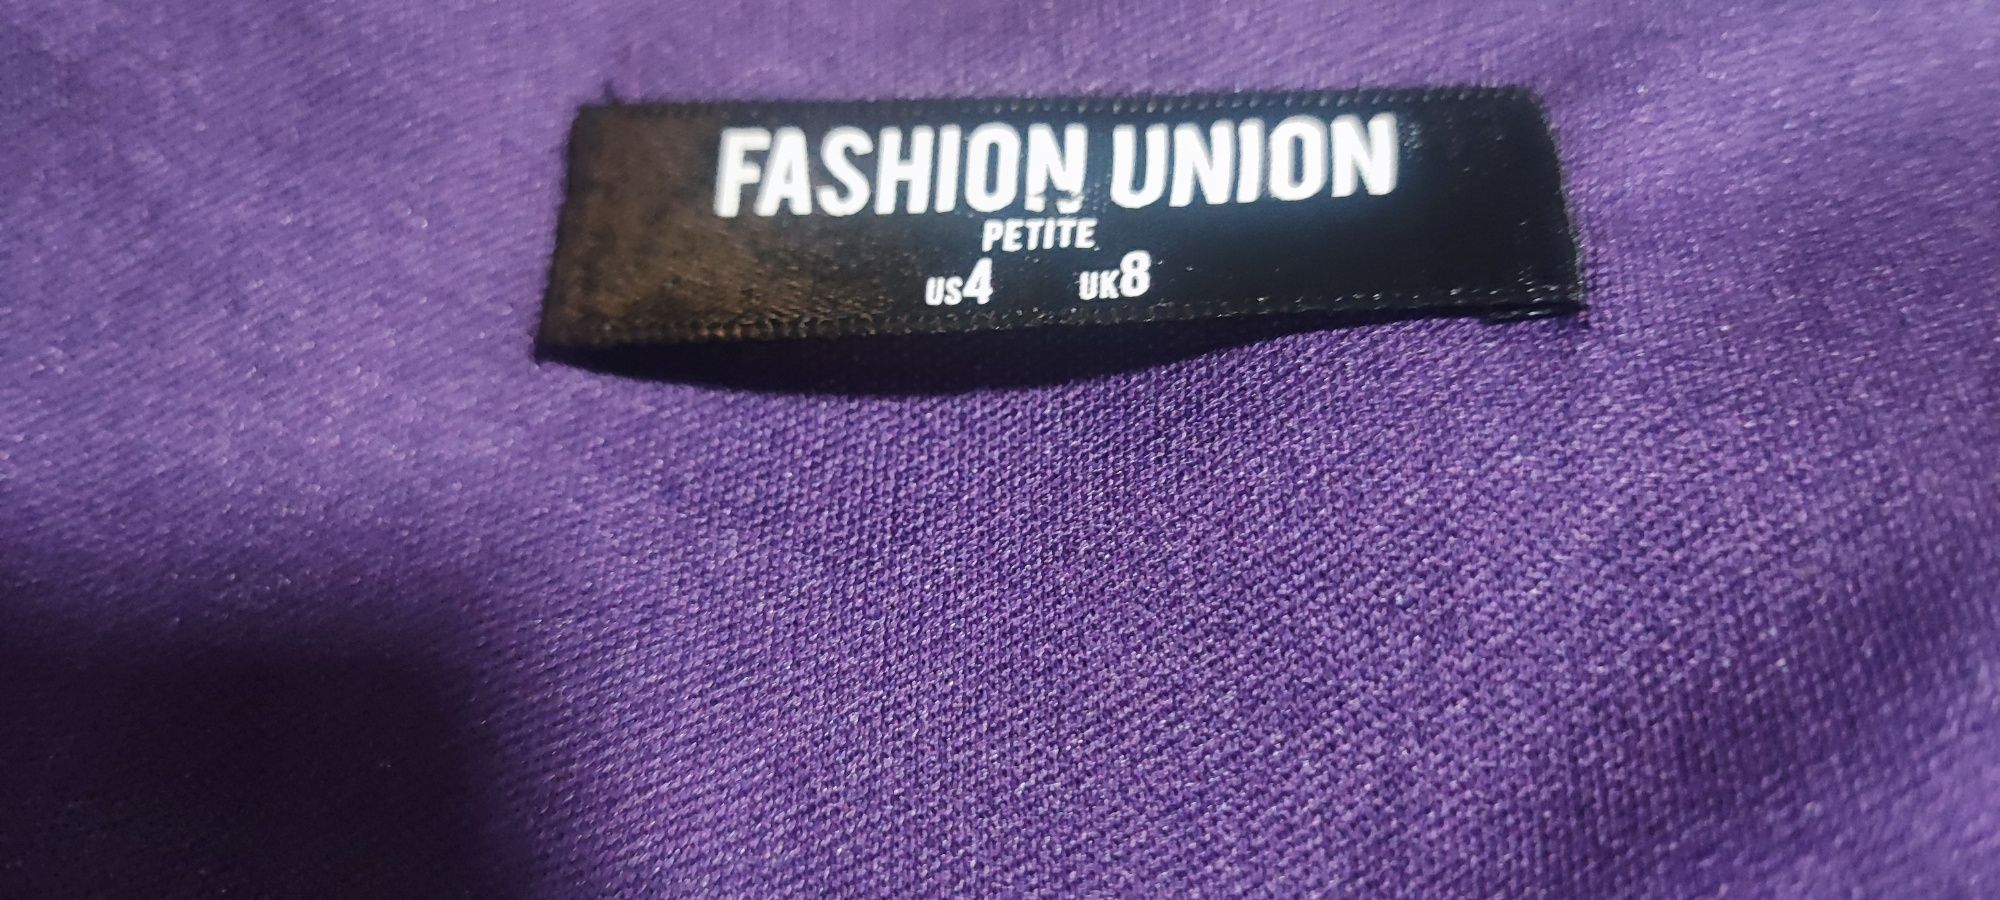 Rochie fashion union 50 lei